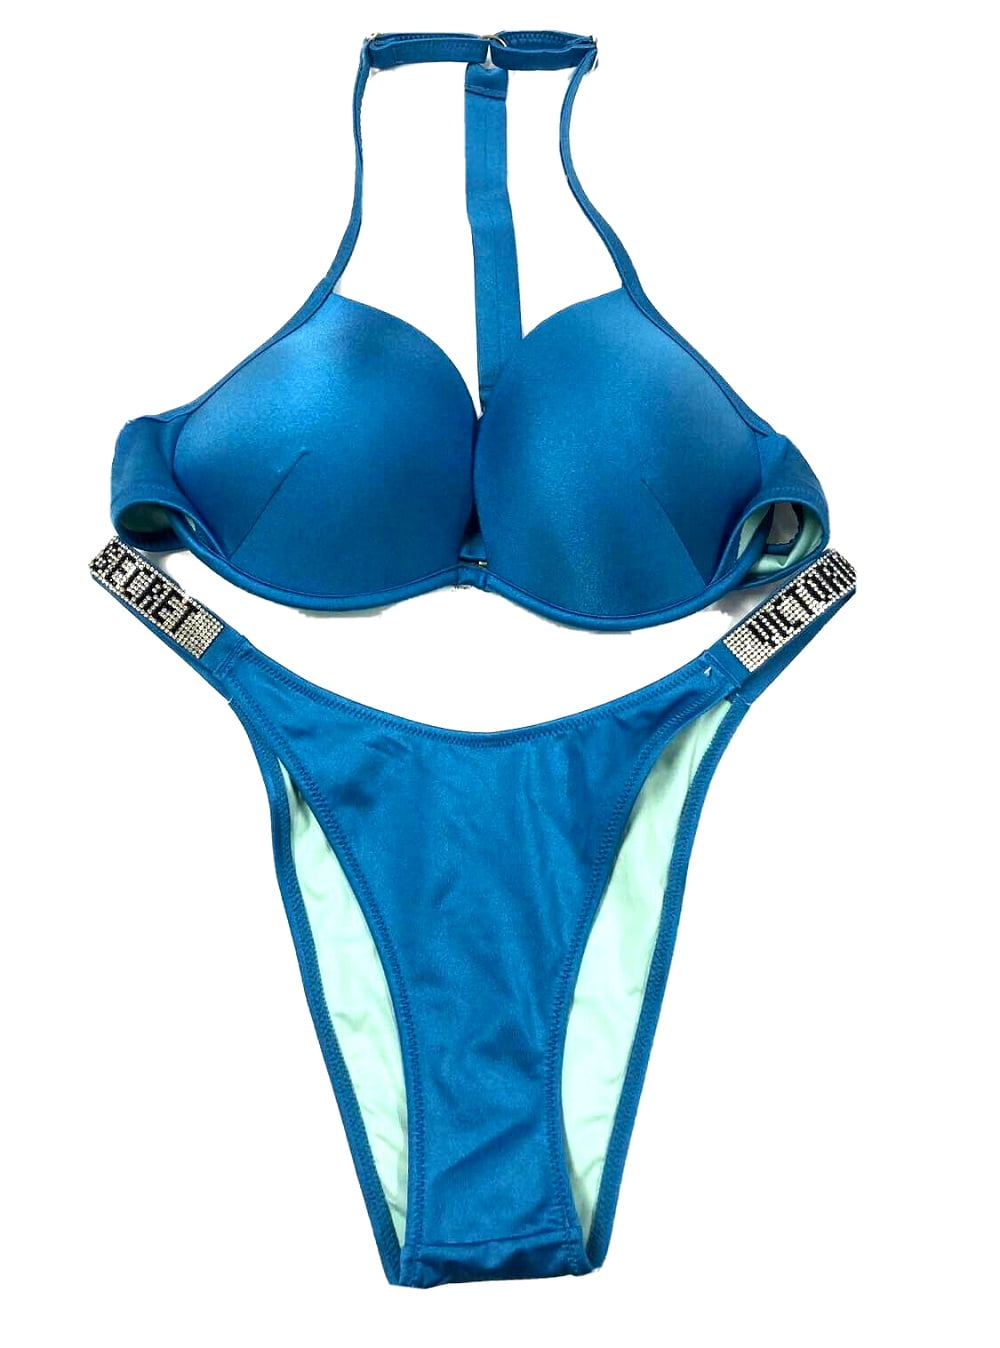 Victoria's Secret, Swim, 36c Xl Halter Bombshell Add 2 Cups Swimsuit Set  Bikini Swim Top Bottoms